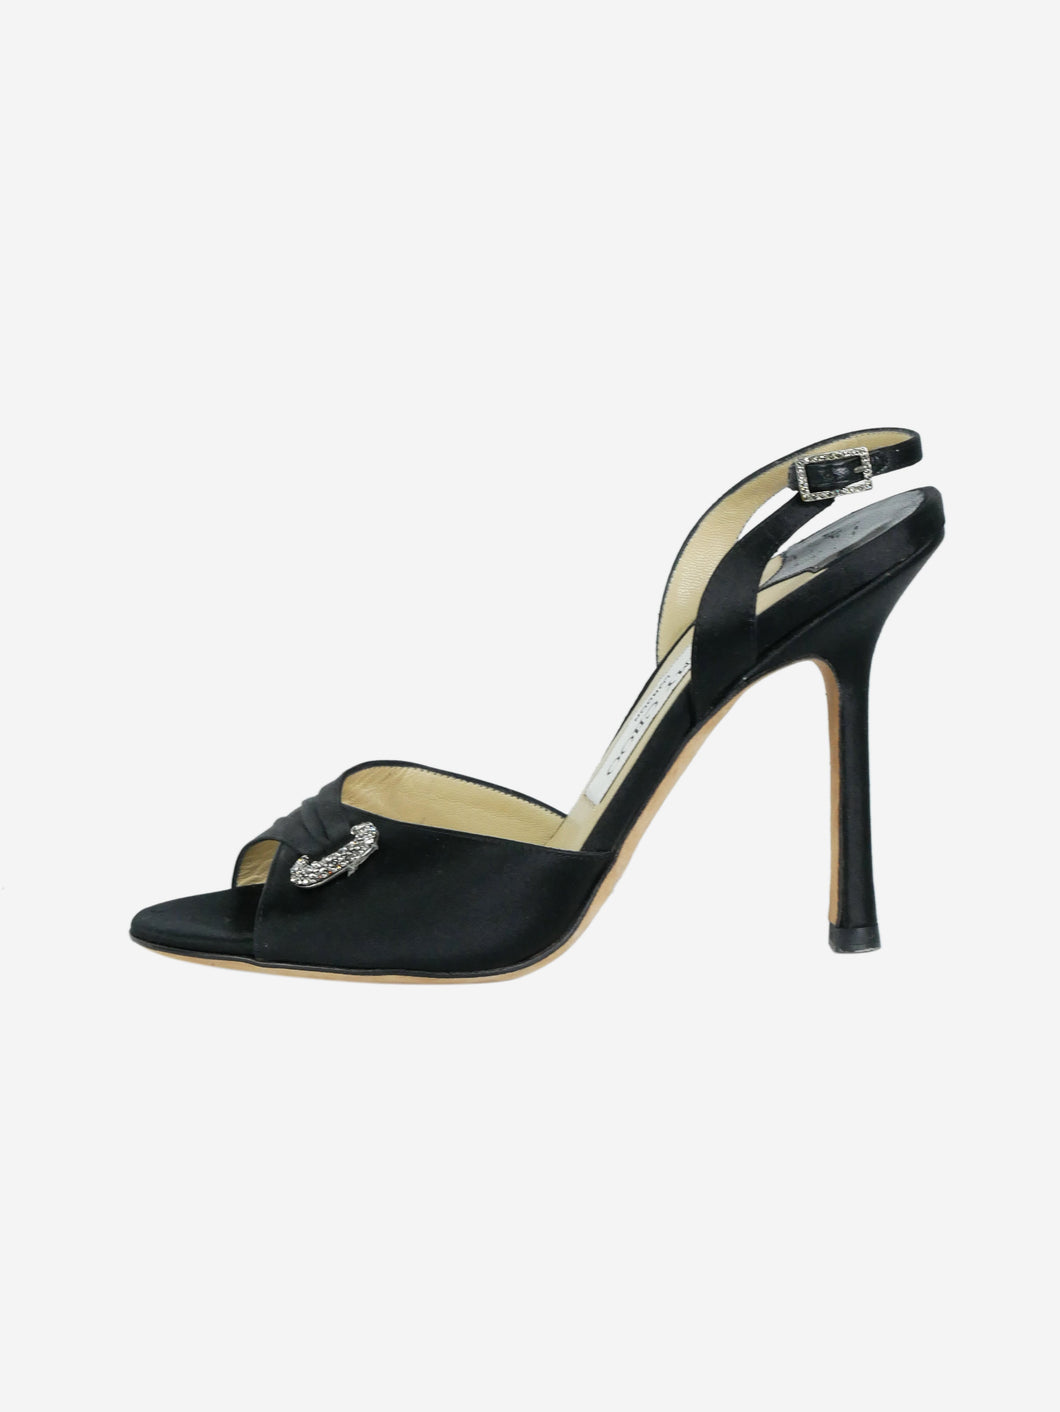 Black satin open toe stiletto heel with crystal buckle - size EU 36 Heels Jimmy Choo 